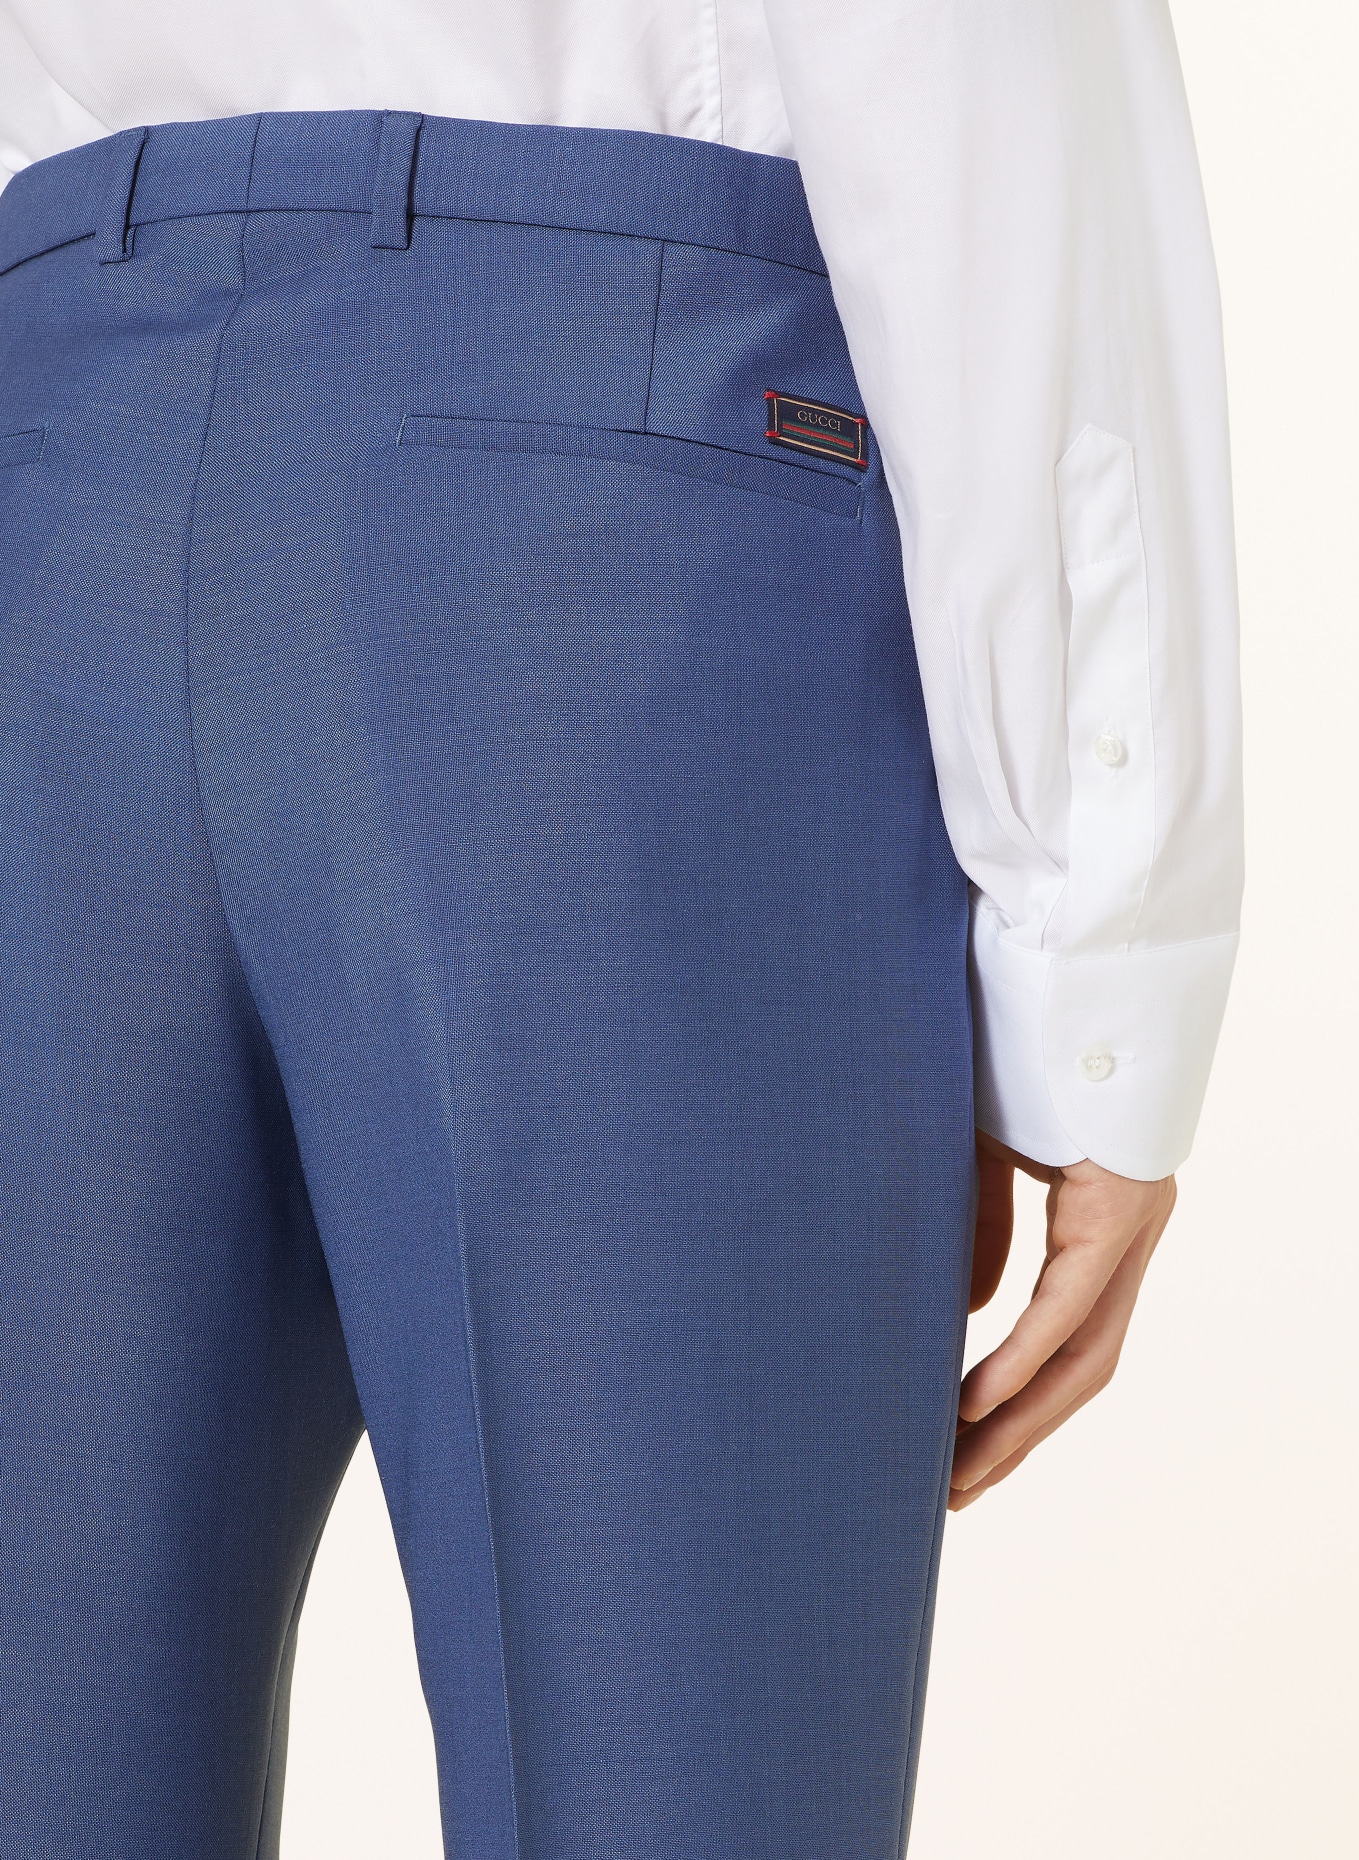 GUCCI Anzughose Slim Fit mit Mohair, Farbe: 4719 STORMY SEA (LIGHT BLUE) (Bild 6)